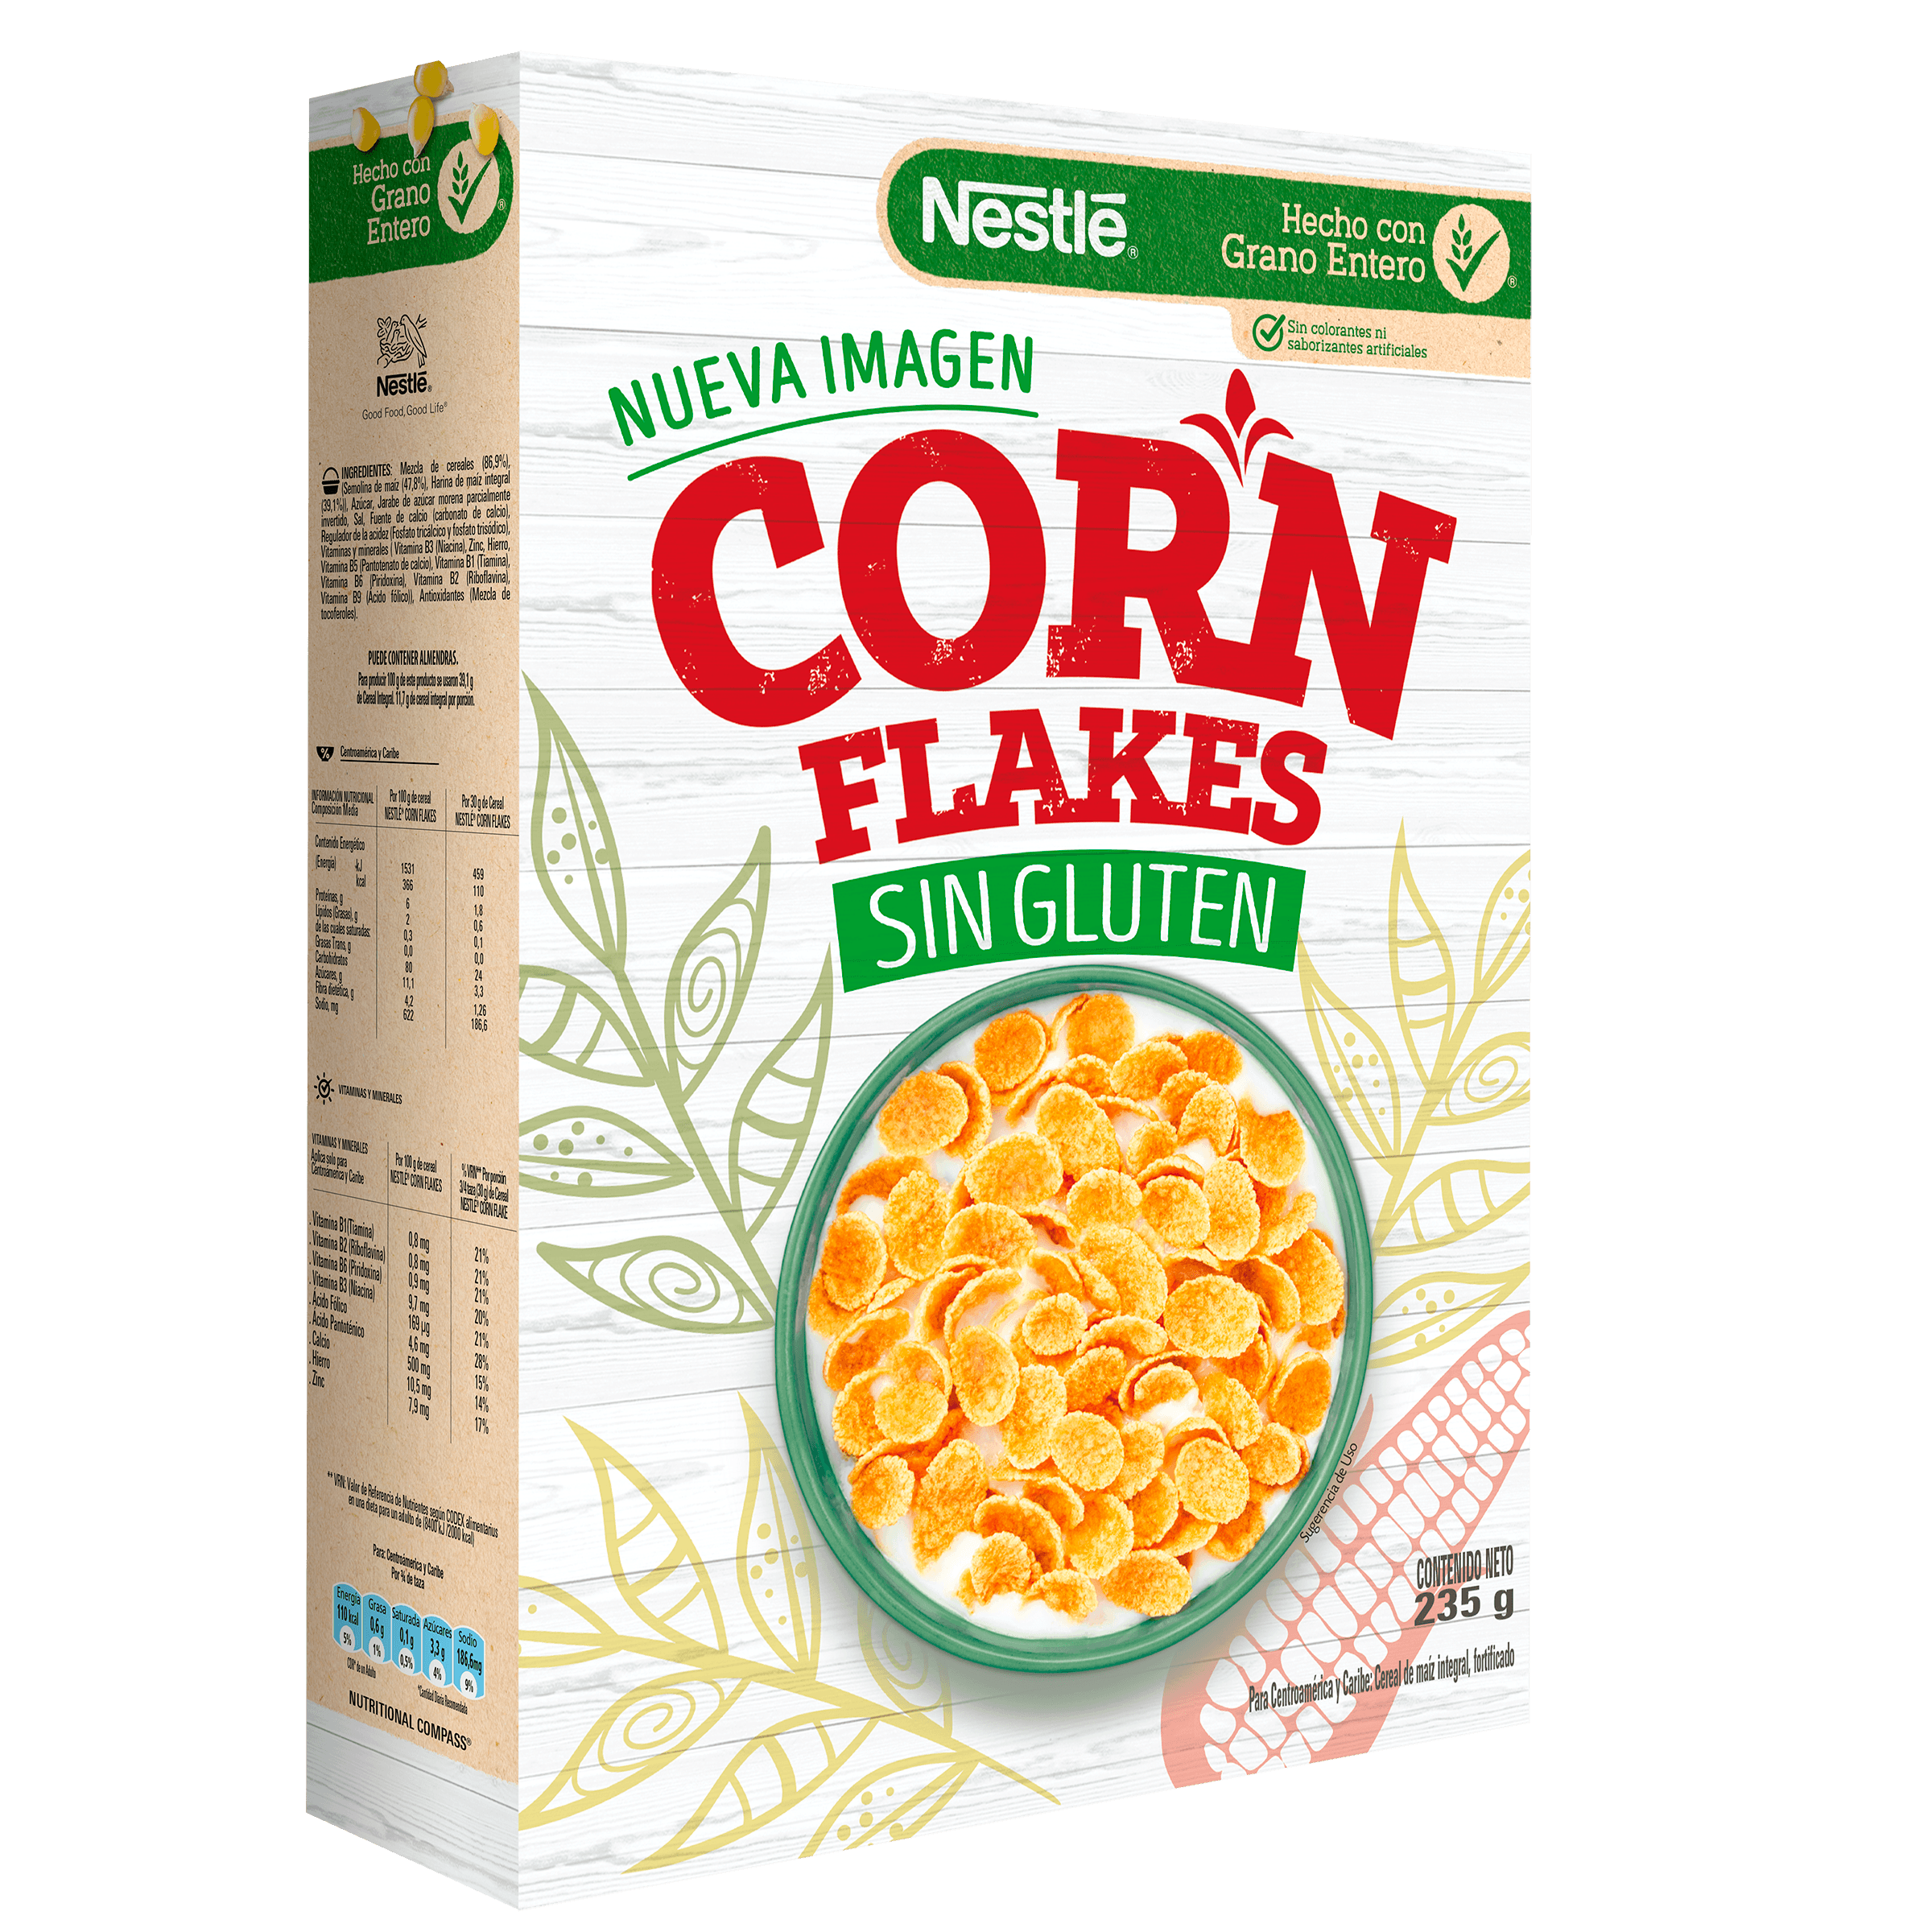 Cereales sin gluten choco corn flakes nestle 375g